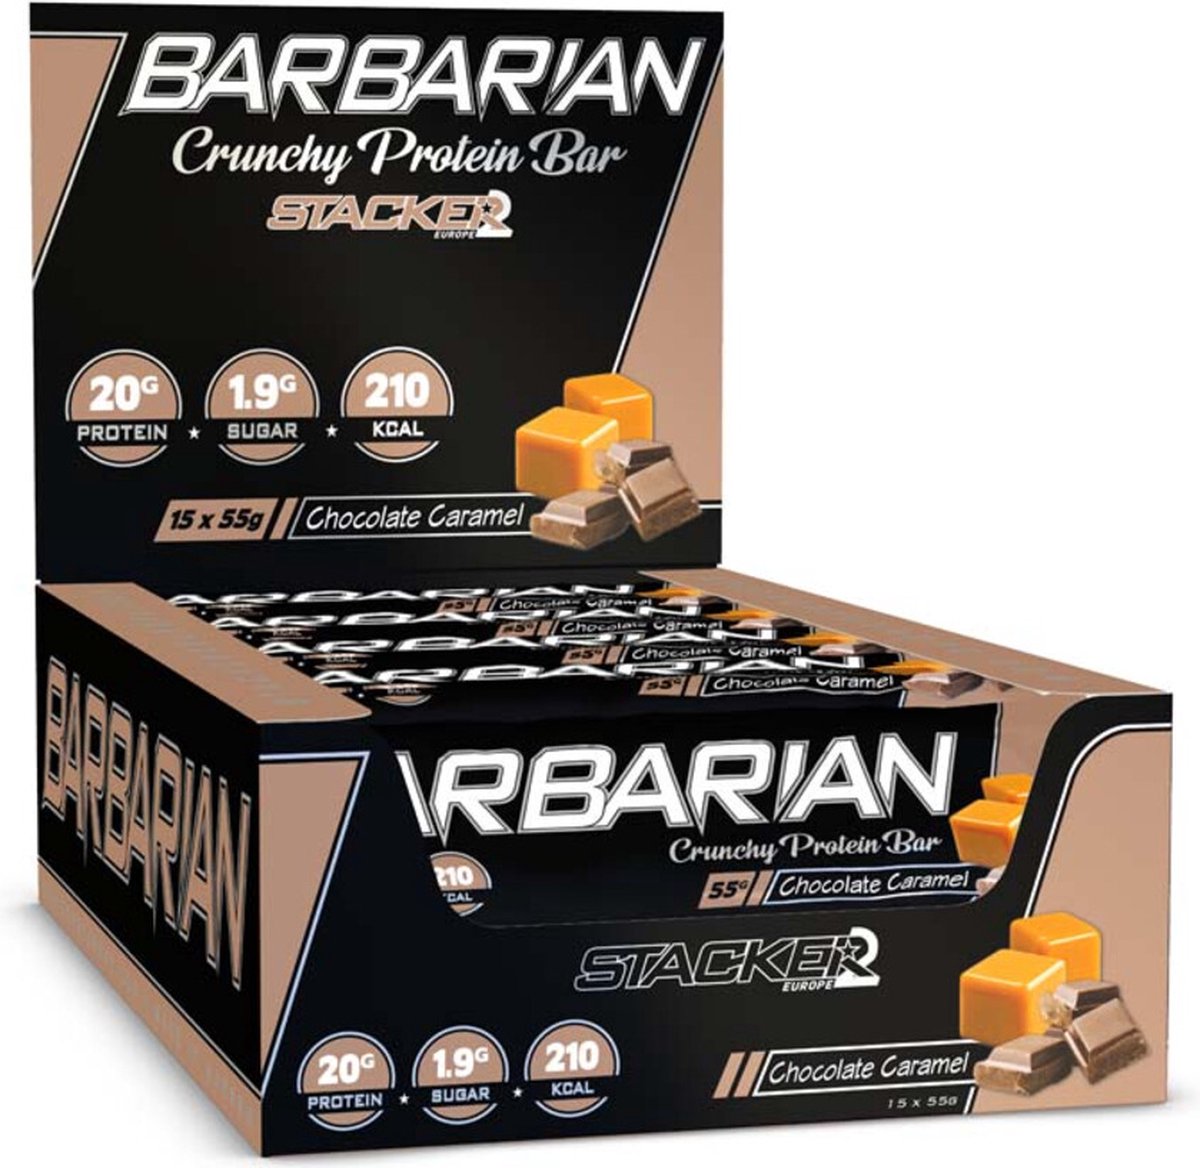 Barbarian Crunchy Protein Bar - Proteïne Repen / Eiwitrepen - Chocolade Caramel - 15 eiwitrepen